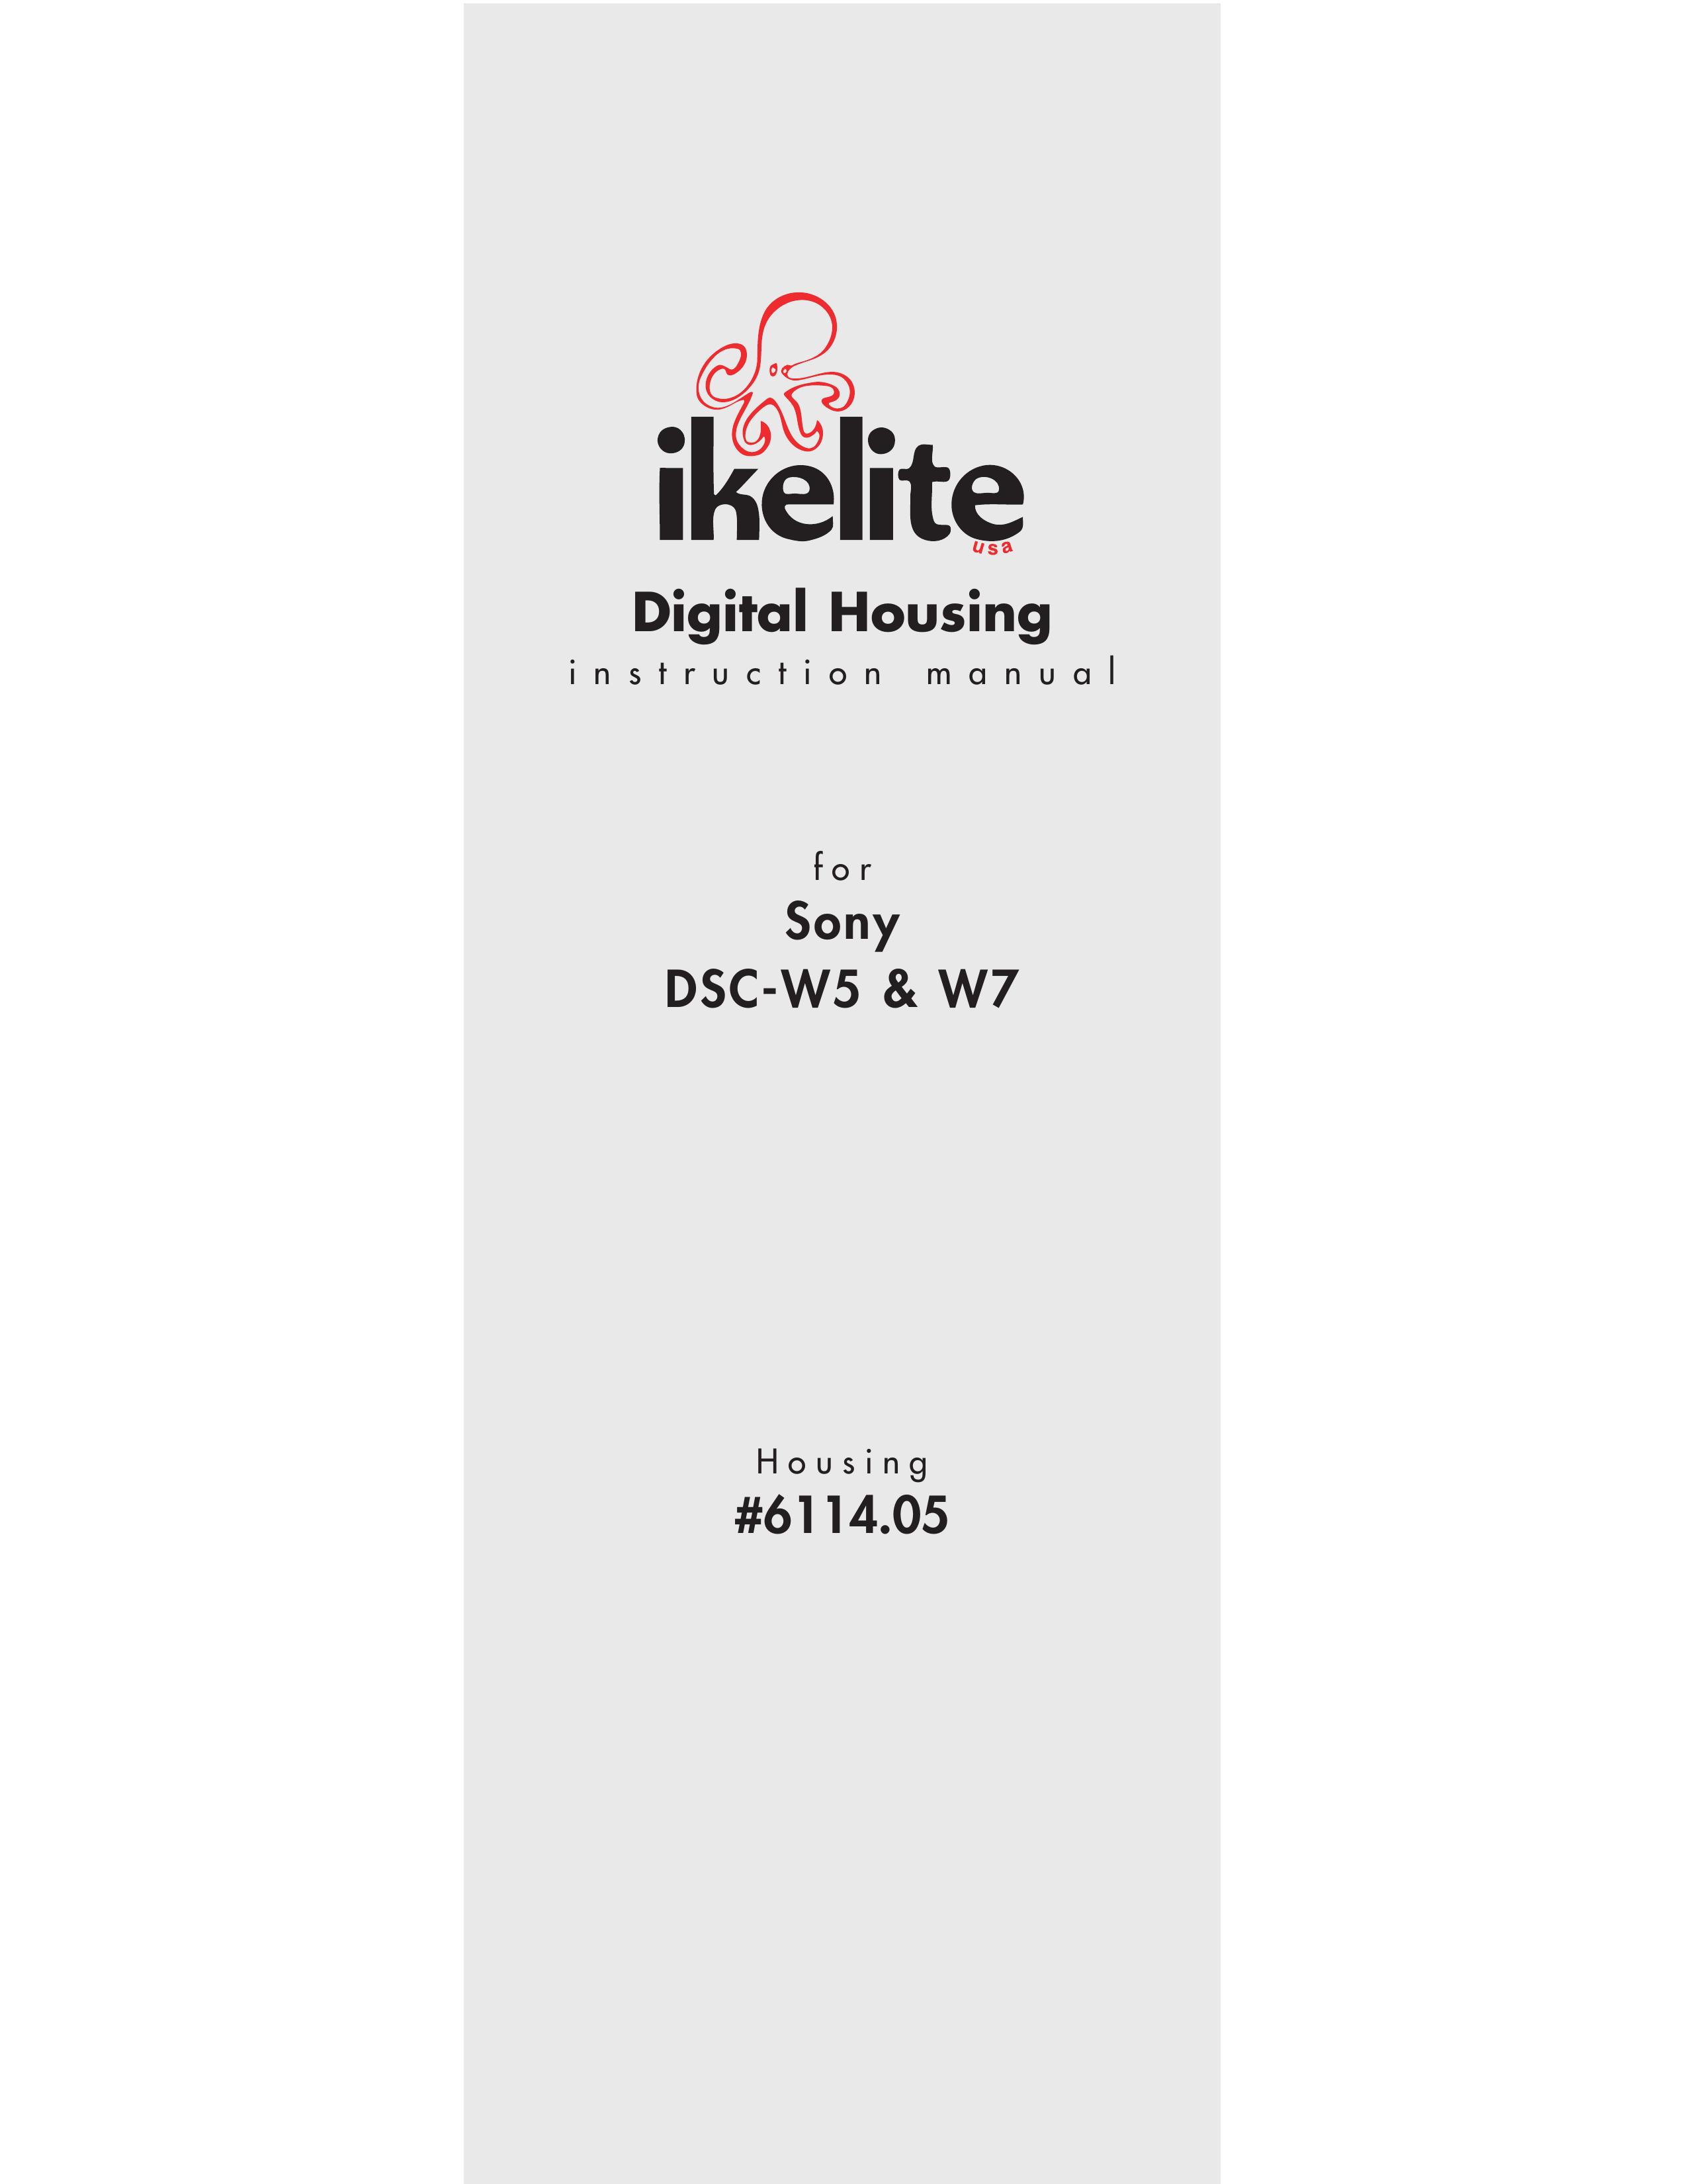 Ikelite DSC-W5 Digital Camera User Manual